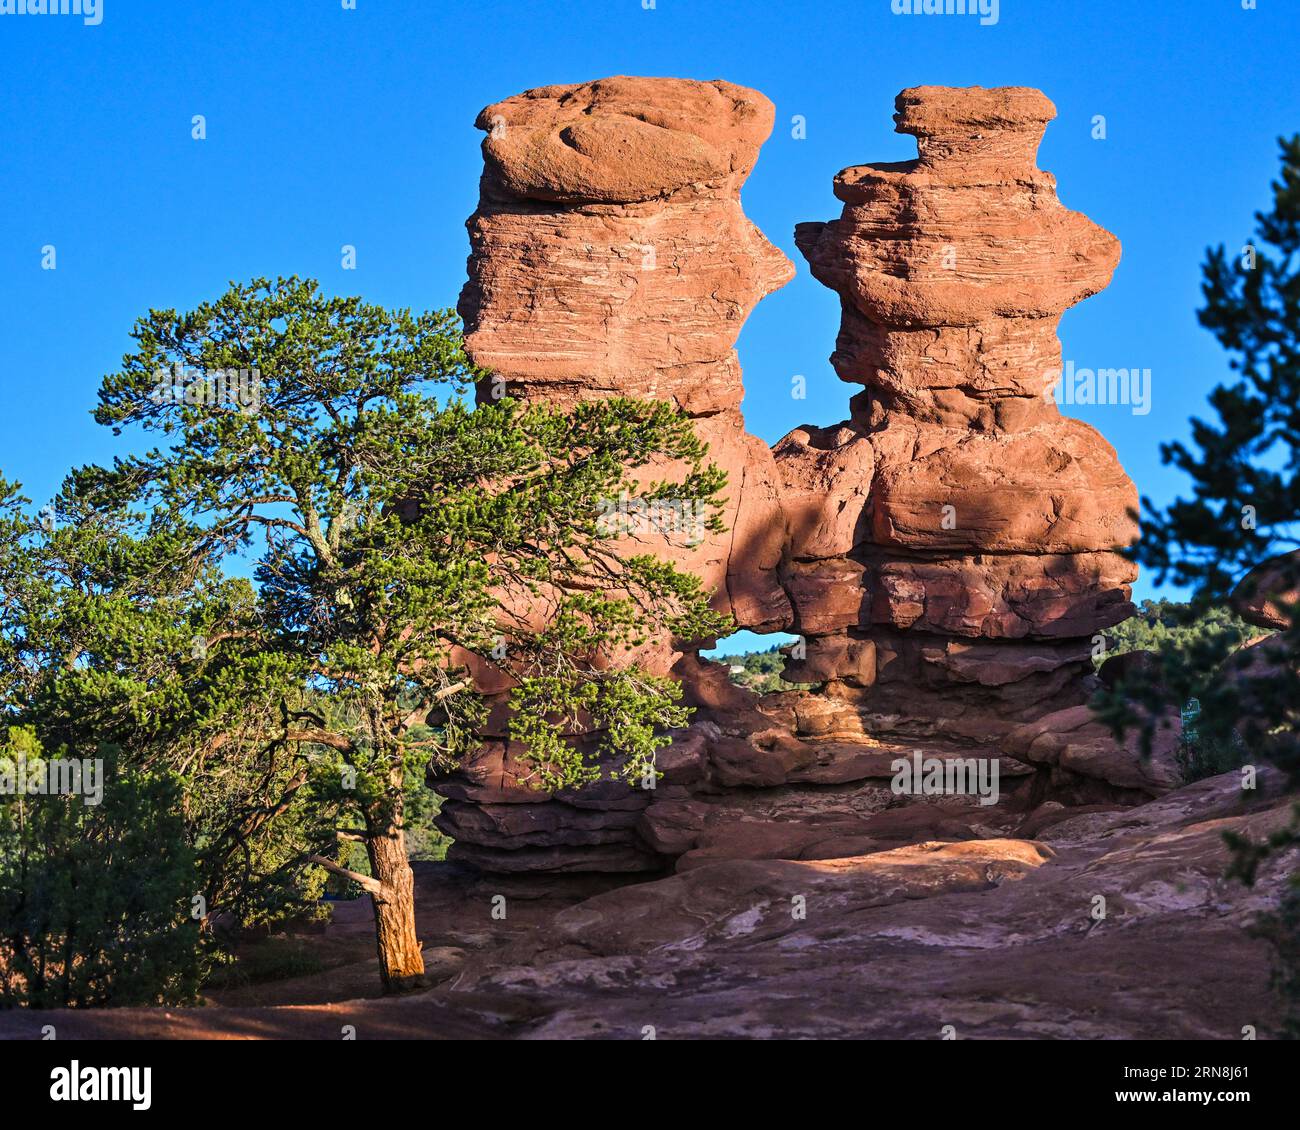 Garden of the Gods Colorado - Colorado Springs State Park & National Natural Landmark - früher Red Rock Corral - geologische Felsformationen Stockfoto